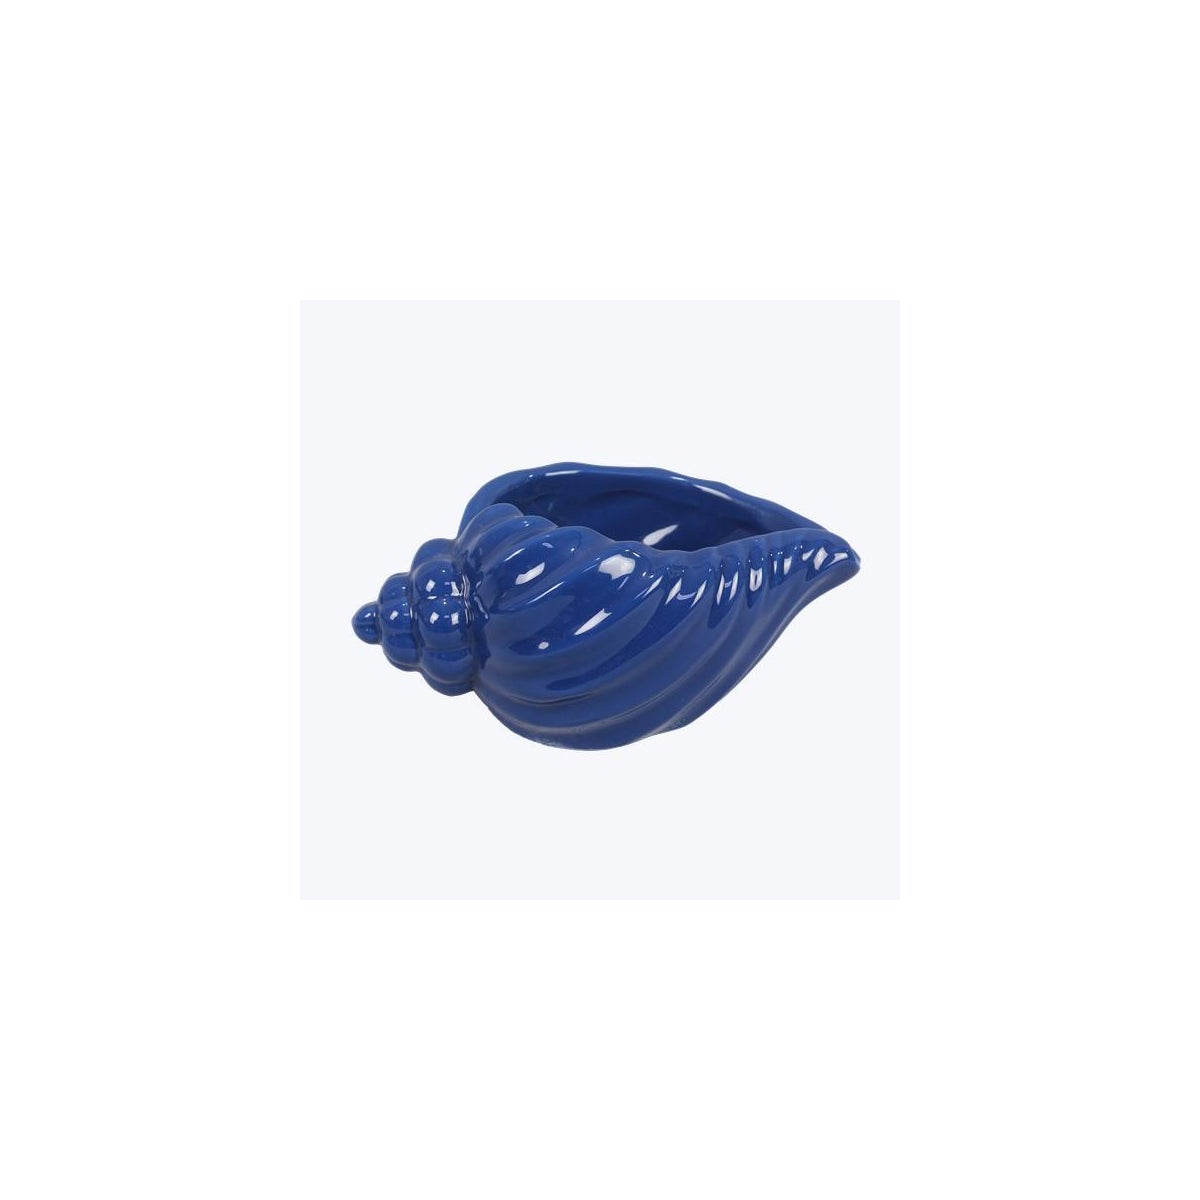 Ceramic Shell-Shaped Bowl/Planter